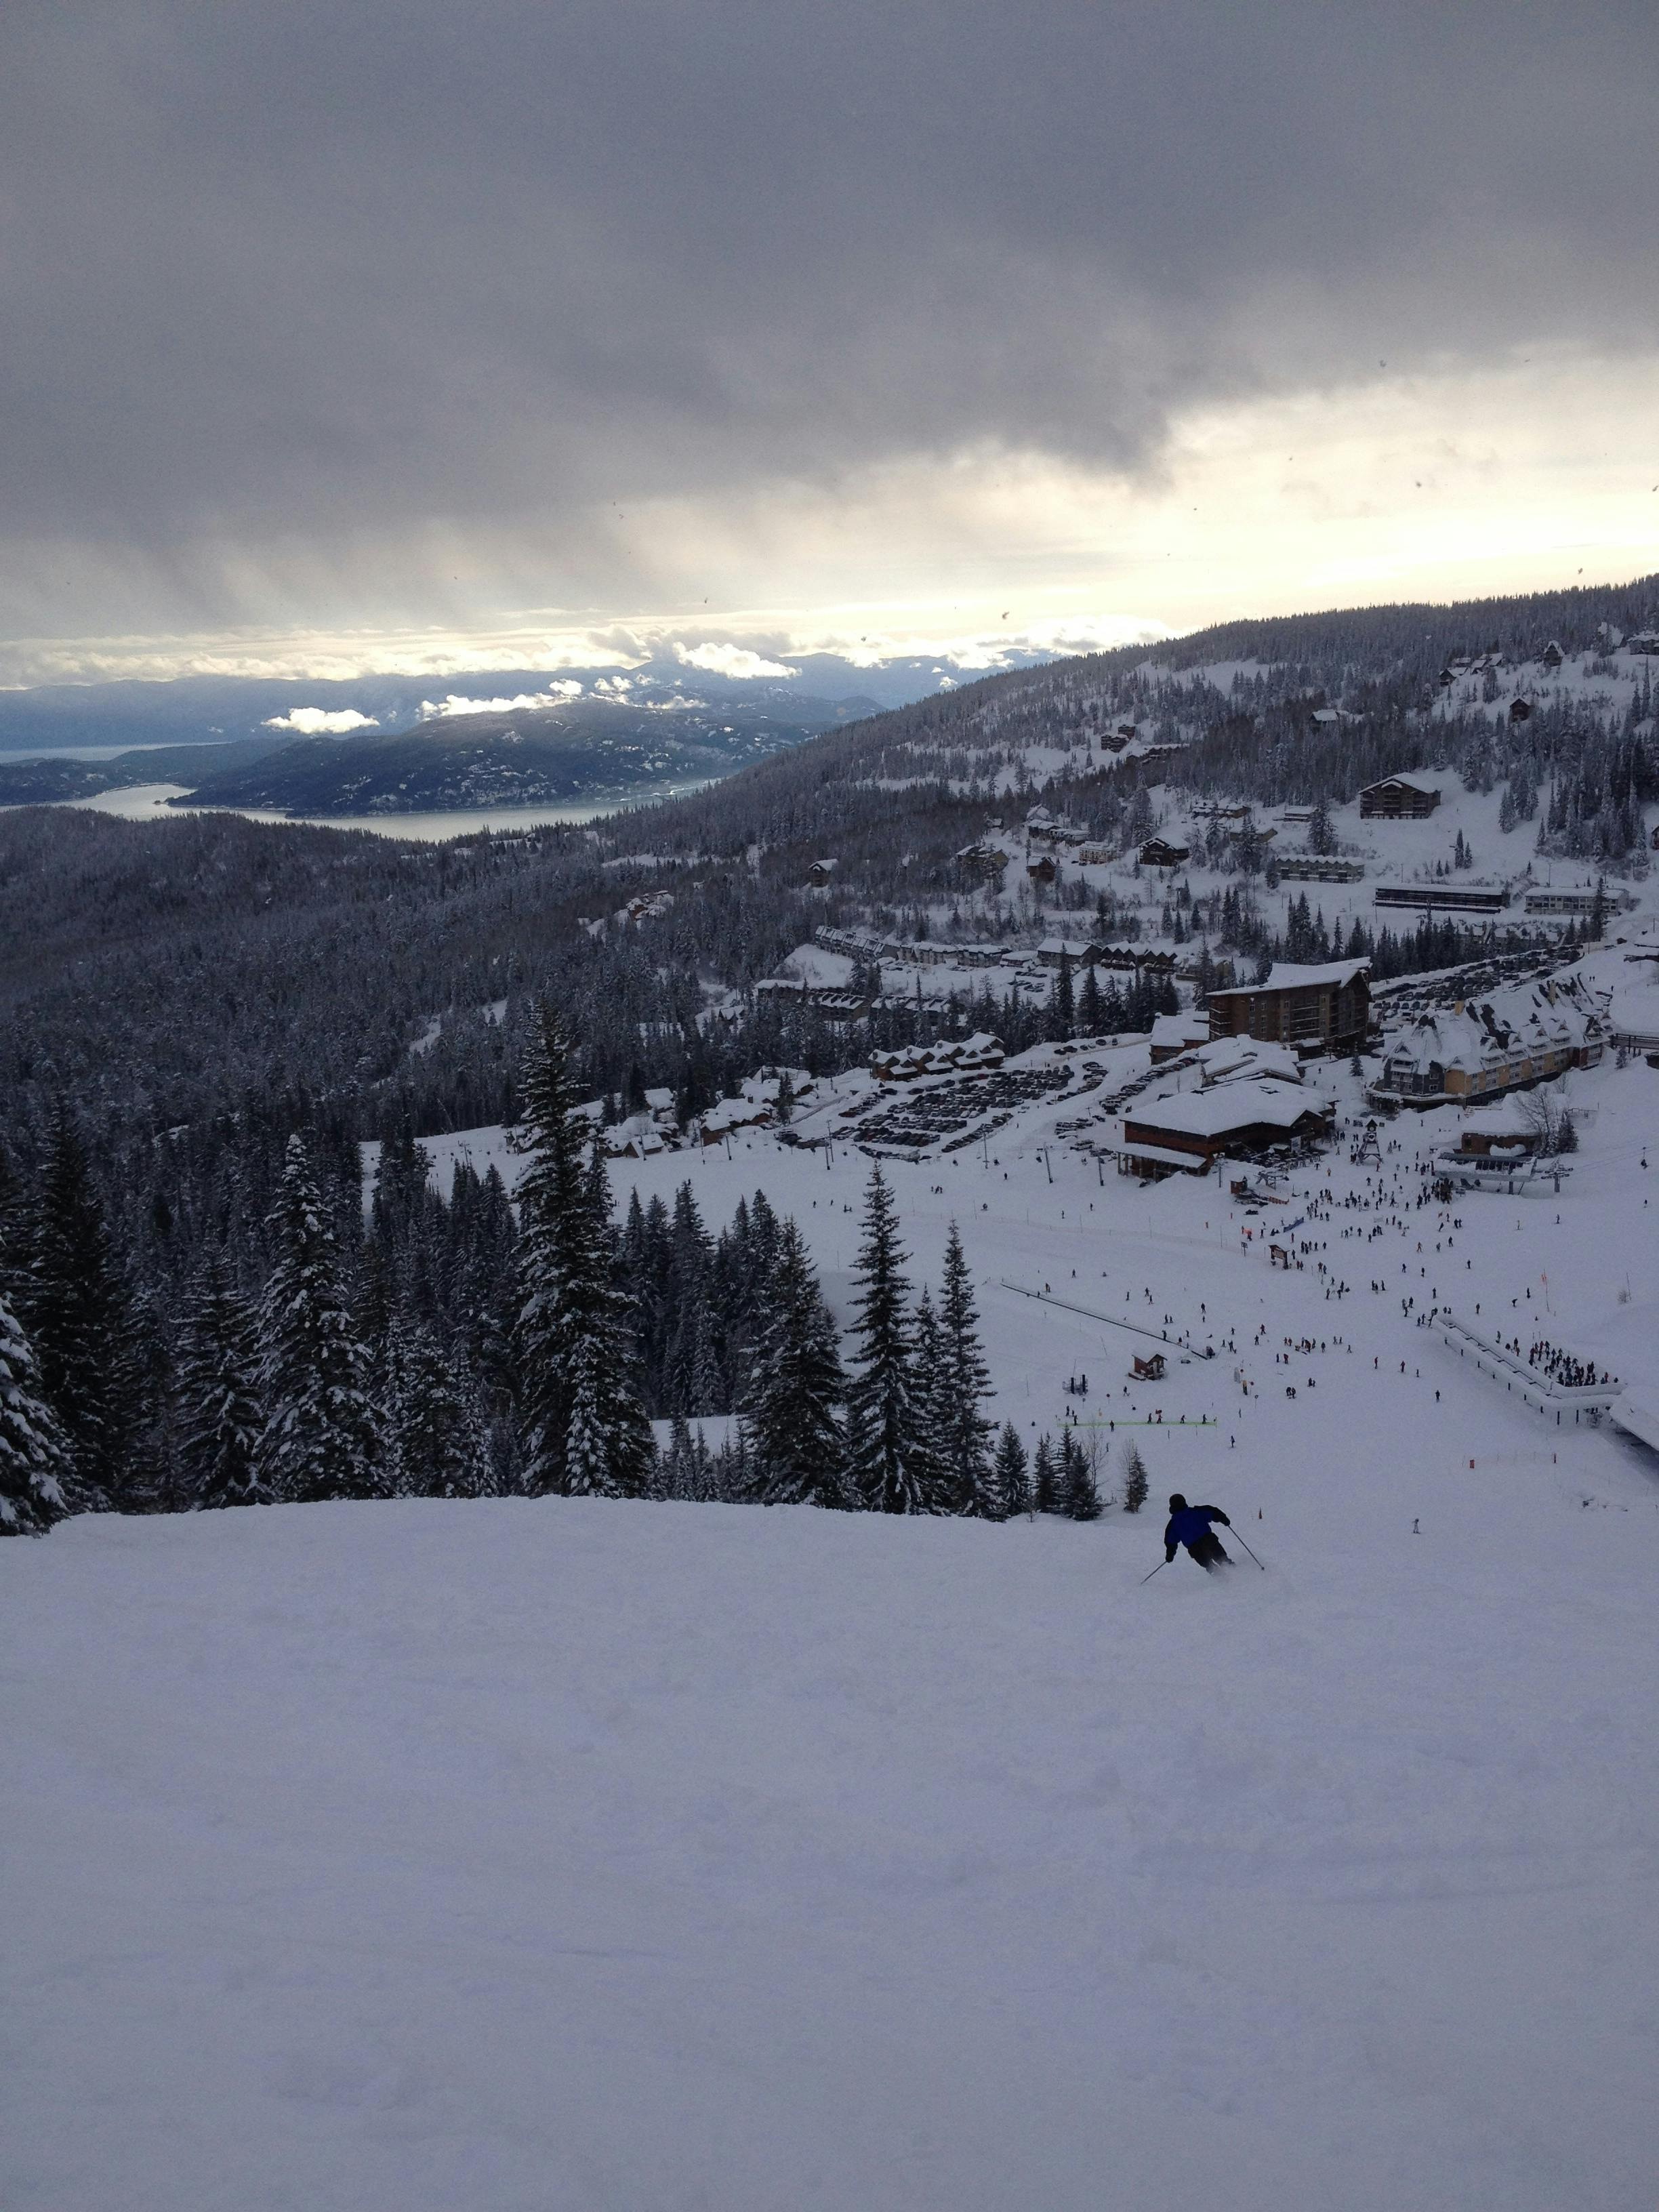 Free stock photo of skiing, snow, winter